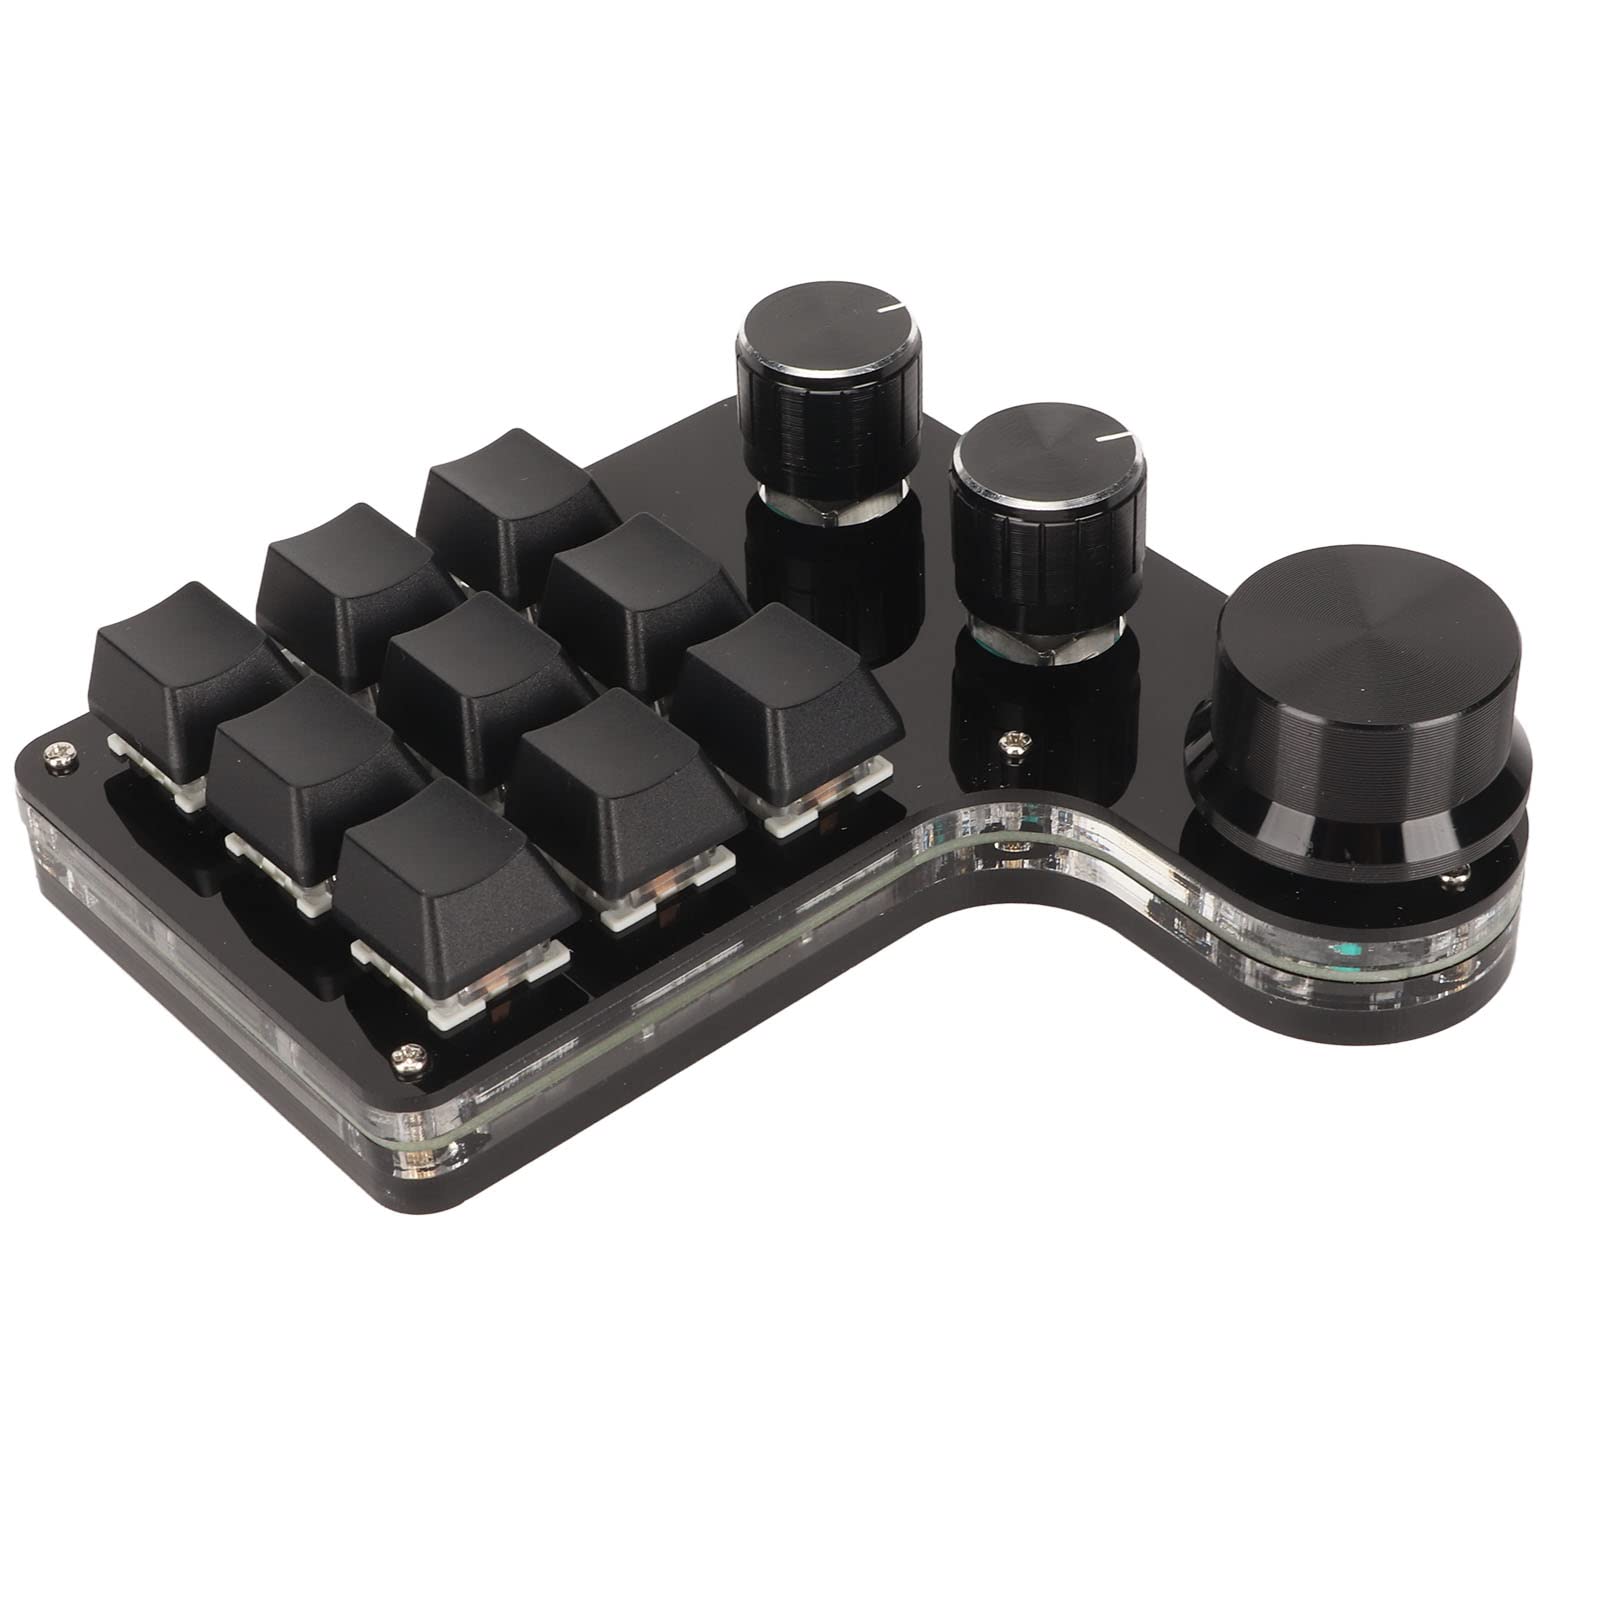 Luqeeg One Handed Macro Mechanical Keyboard DIY Programmable Gaming Keyboard Mini Macro Mechanical Gaming Keyboard with 3 K